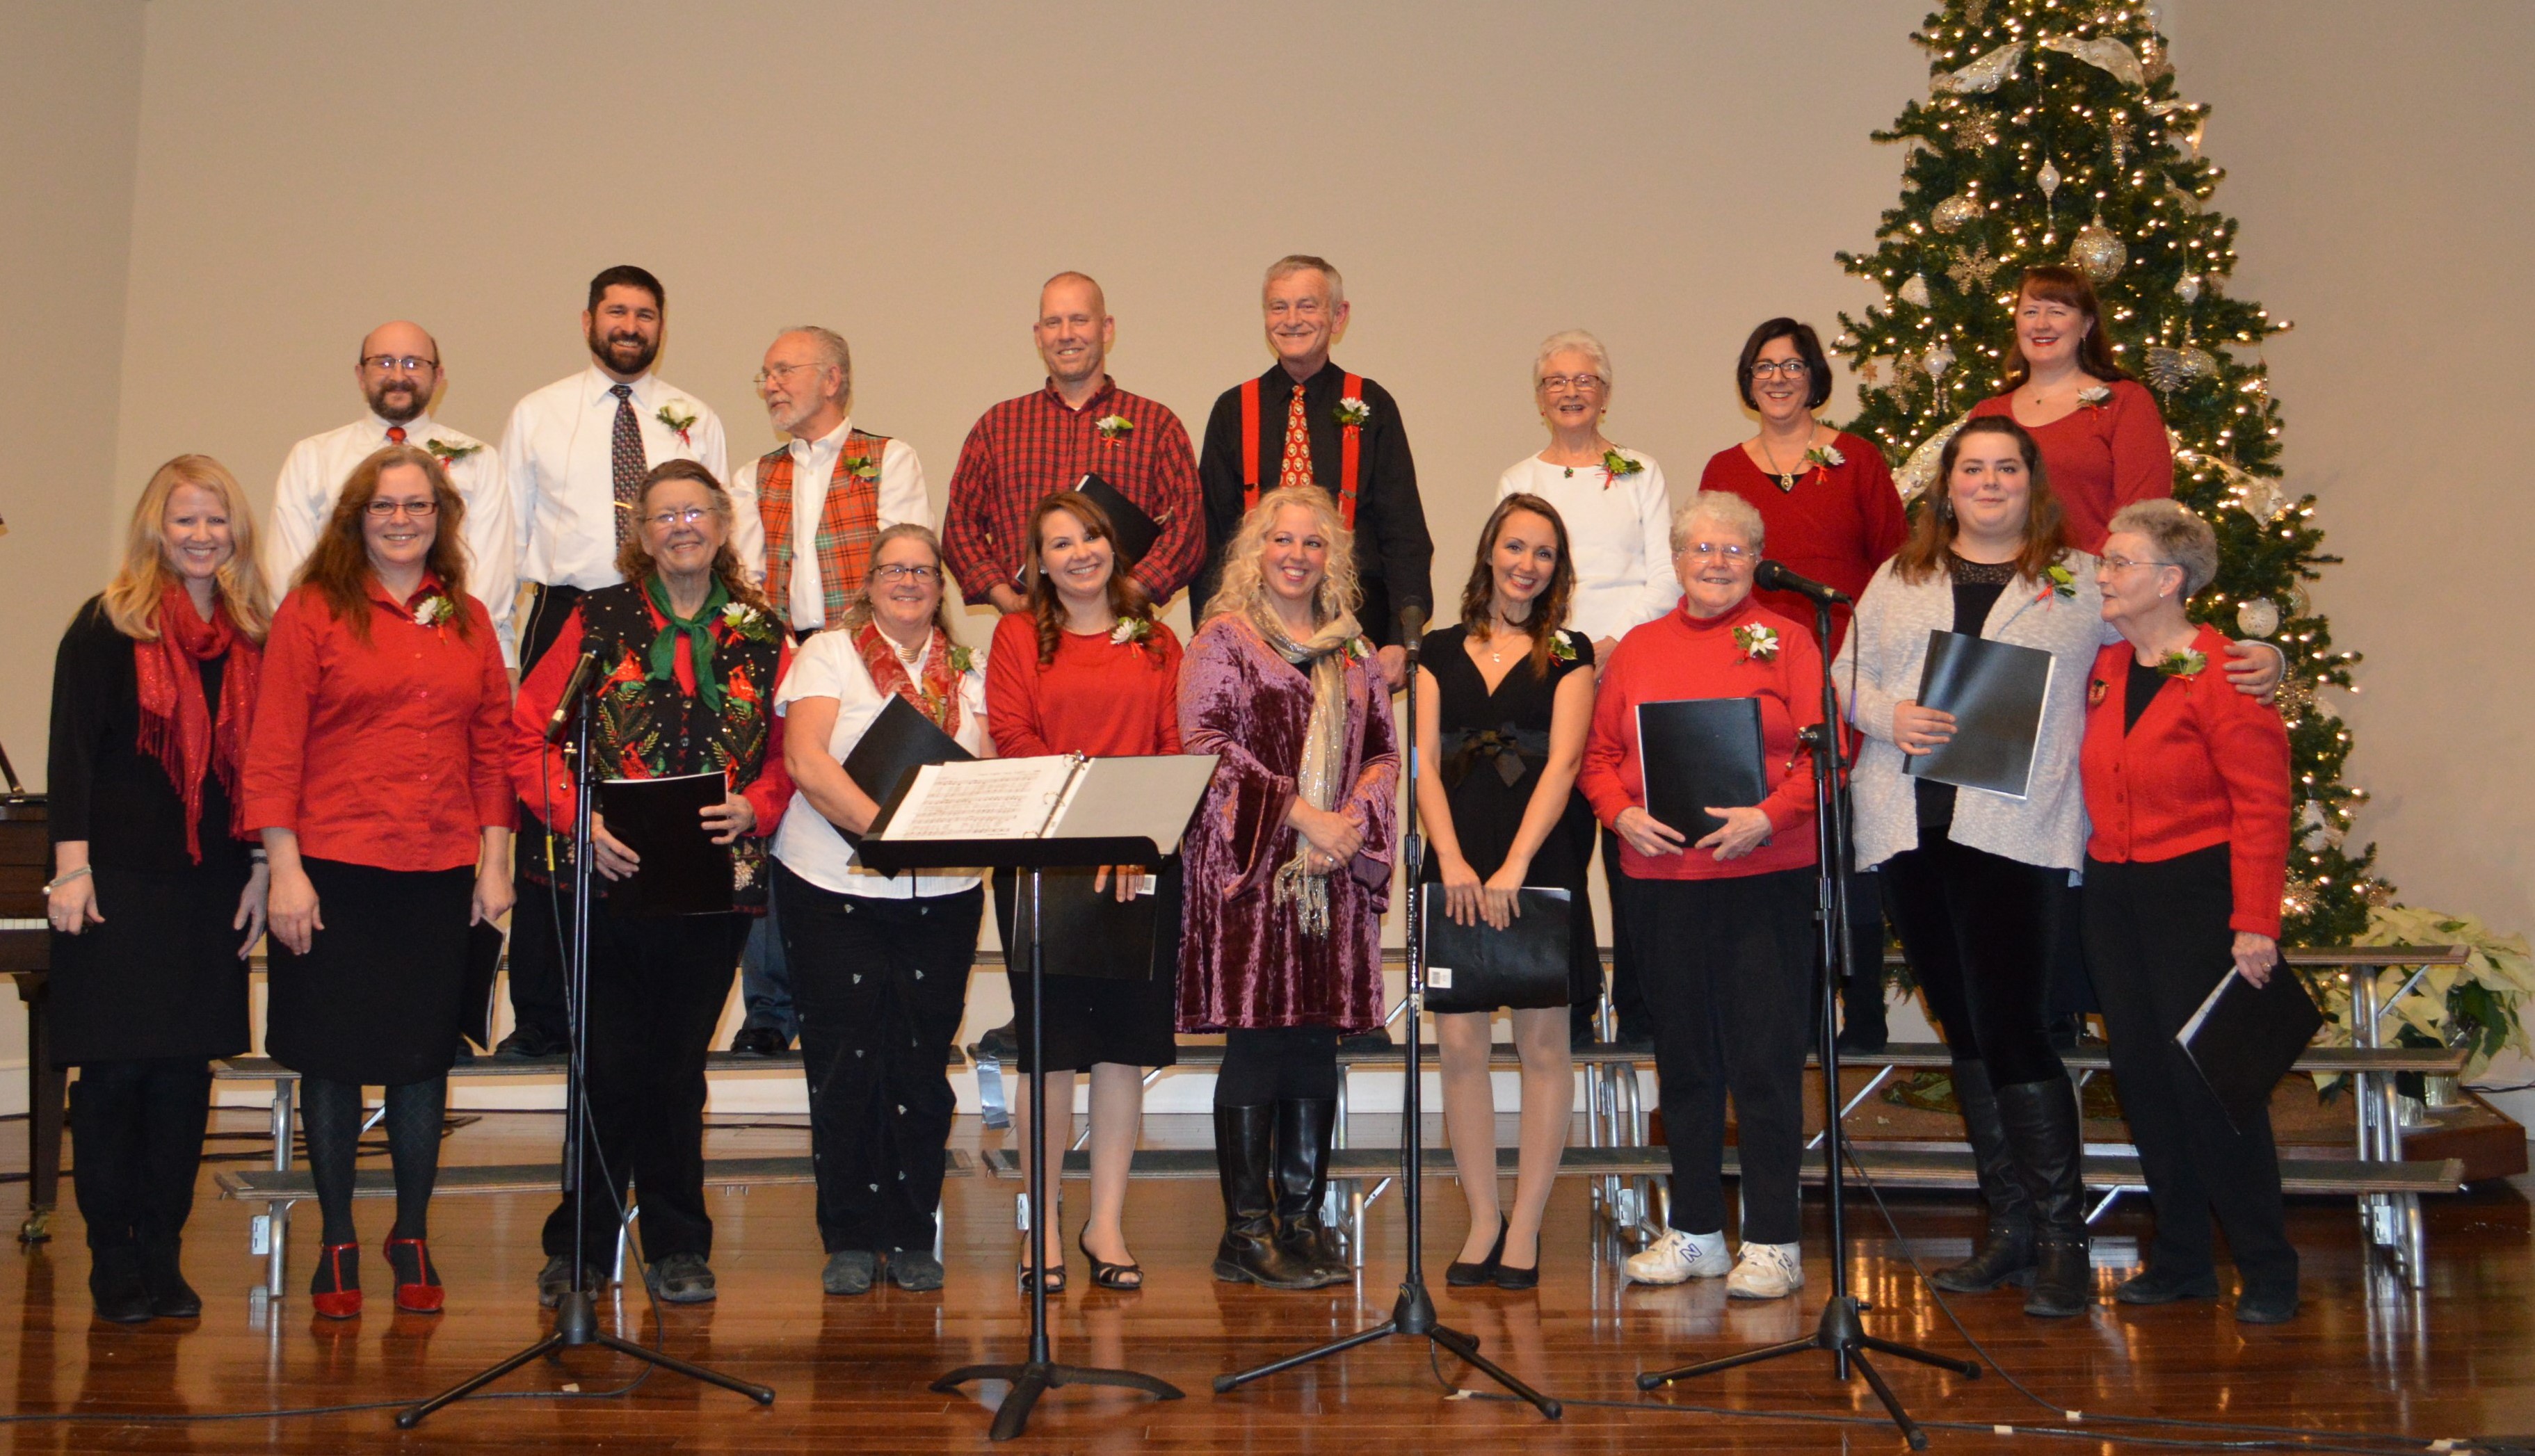 Christmas choir singing in church for Christmas season. 